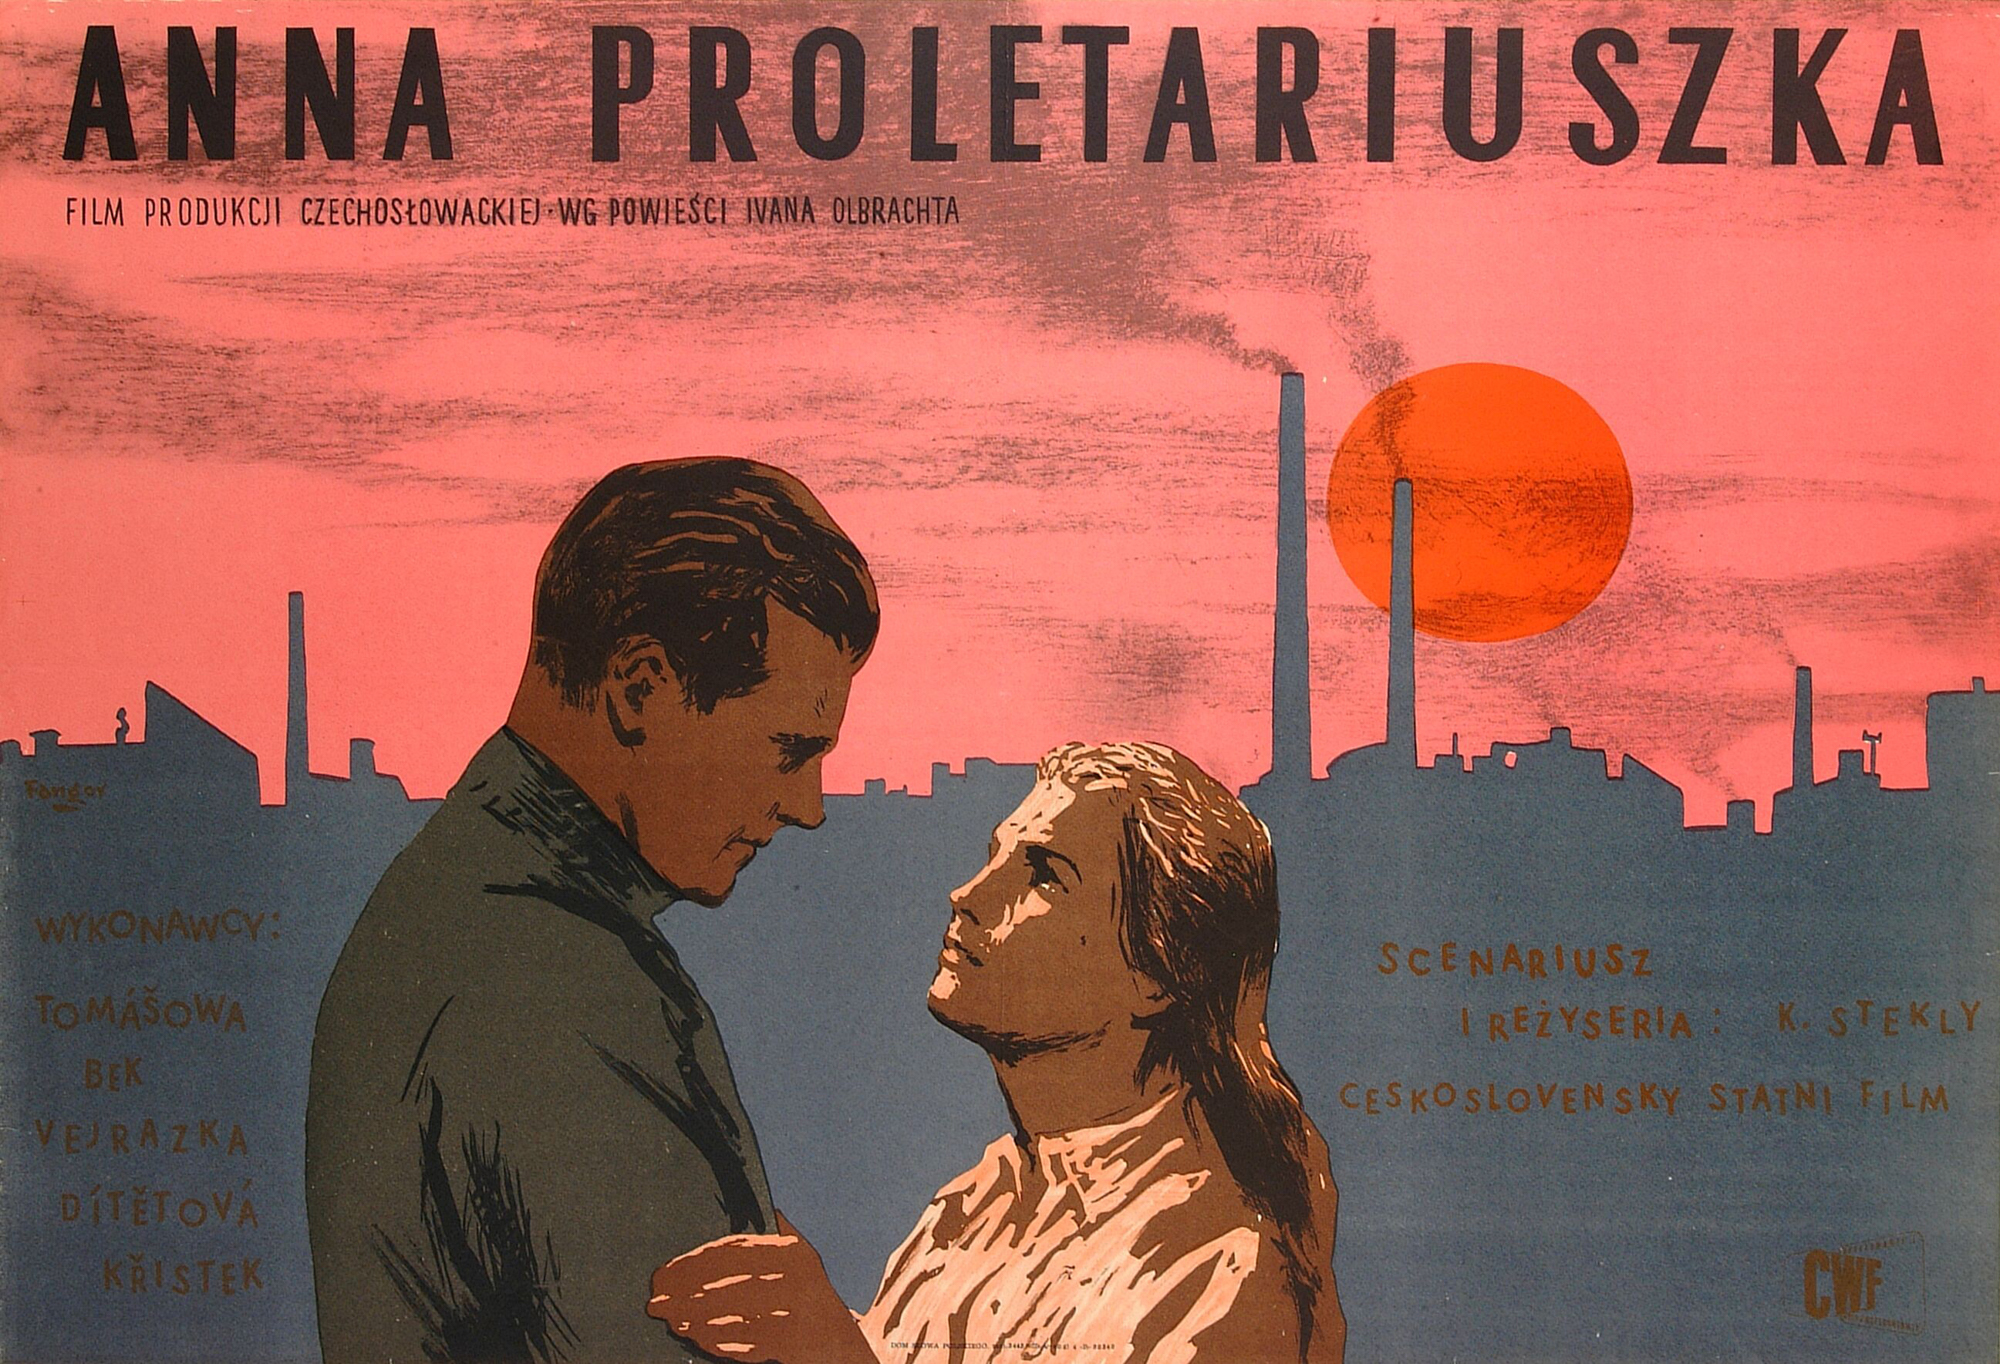 Wojciech Fangor: Anna proletariuszka, 1954